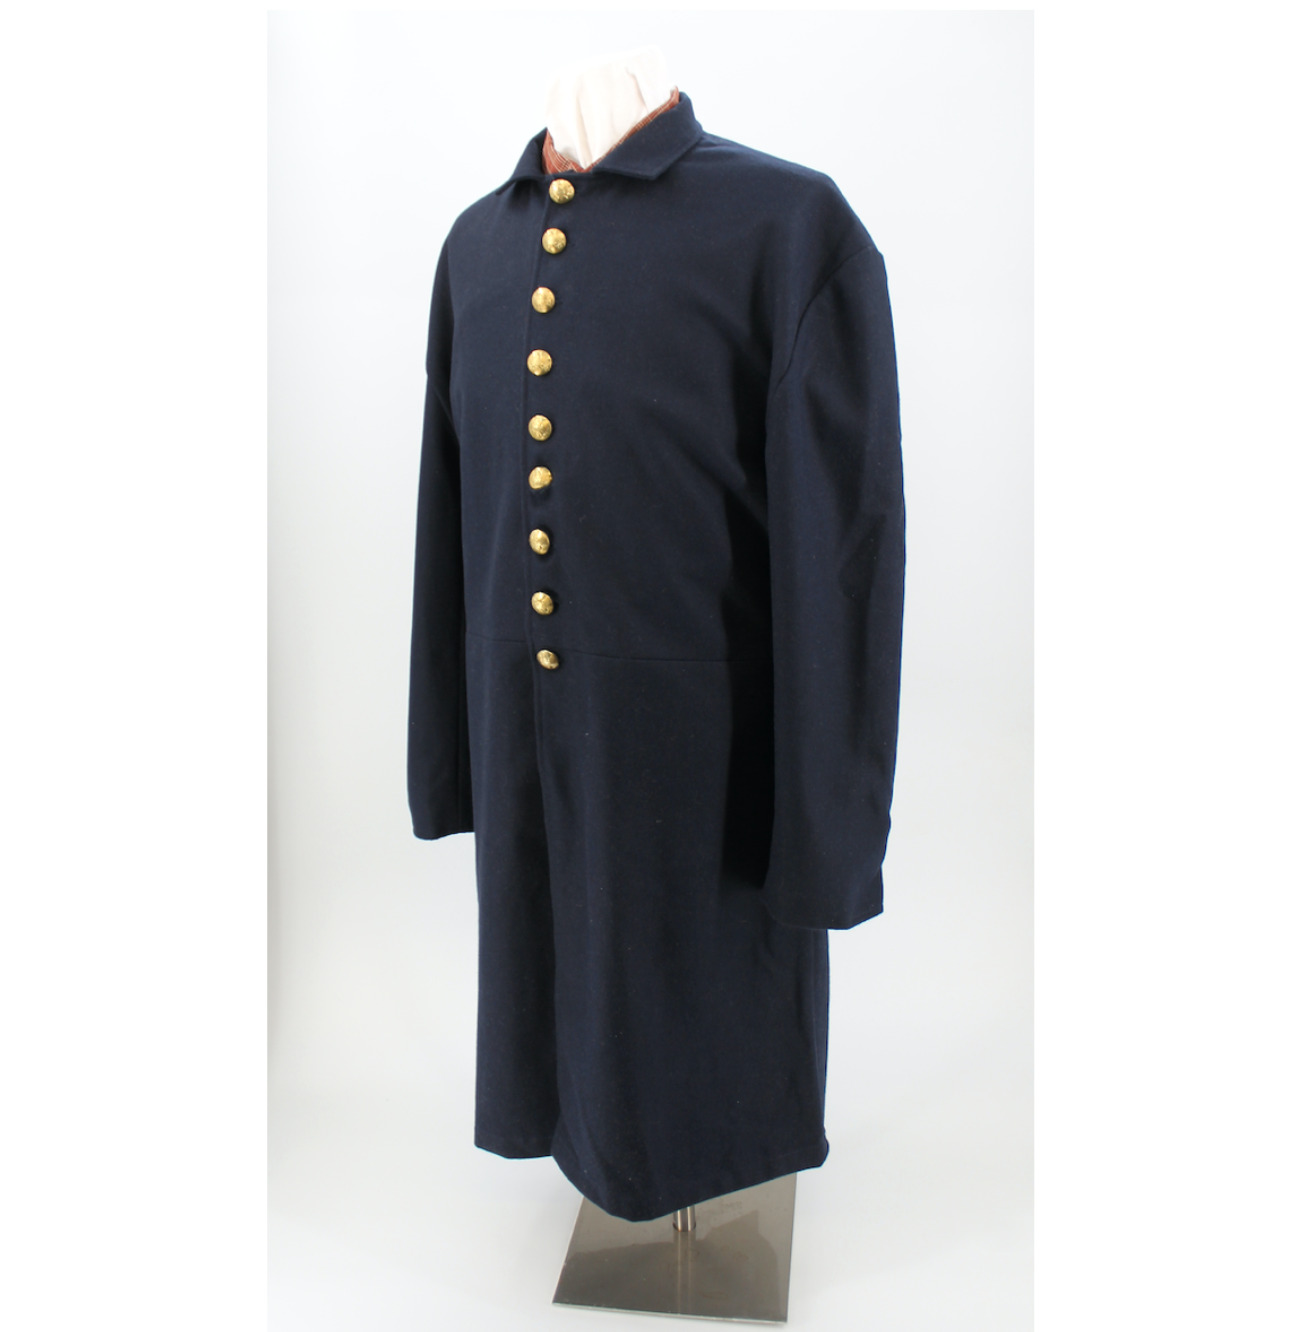 Union Civil War Junior Officer Frock Coat / Federal Officer's Coat - Size 40/42